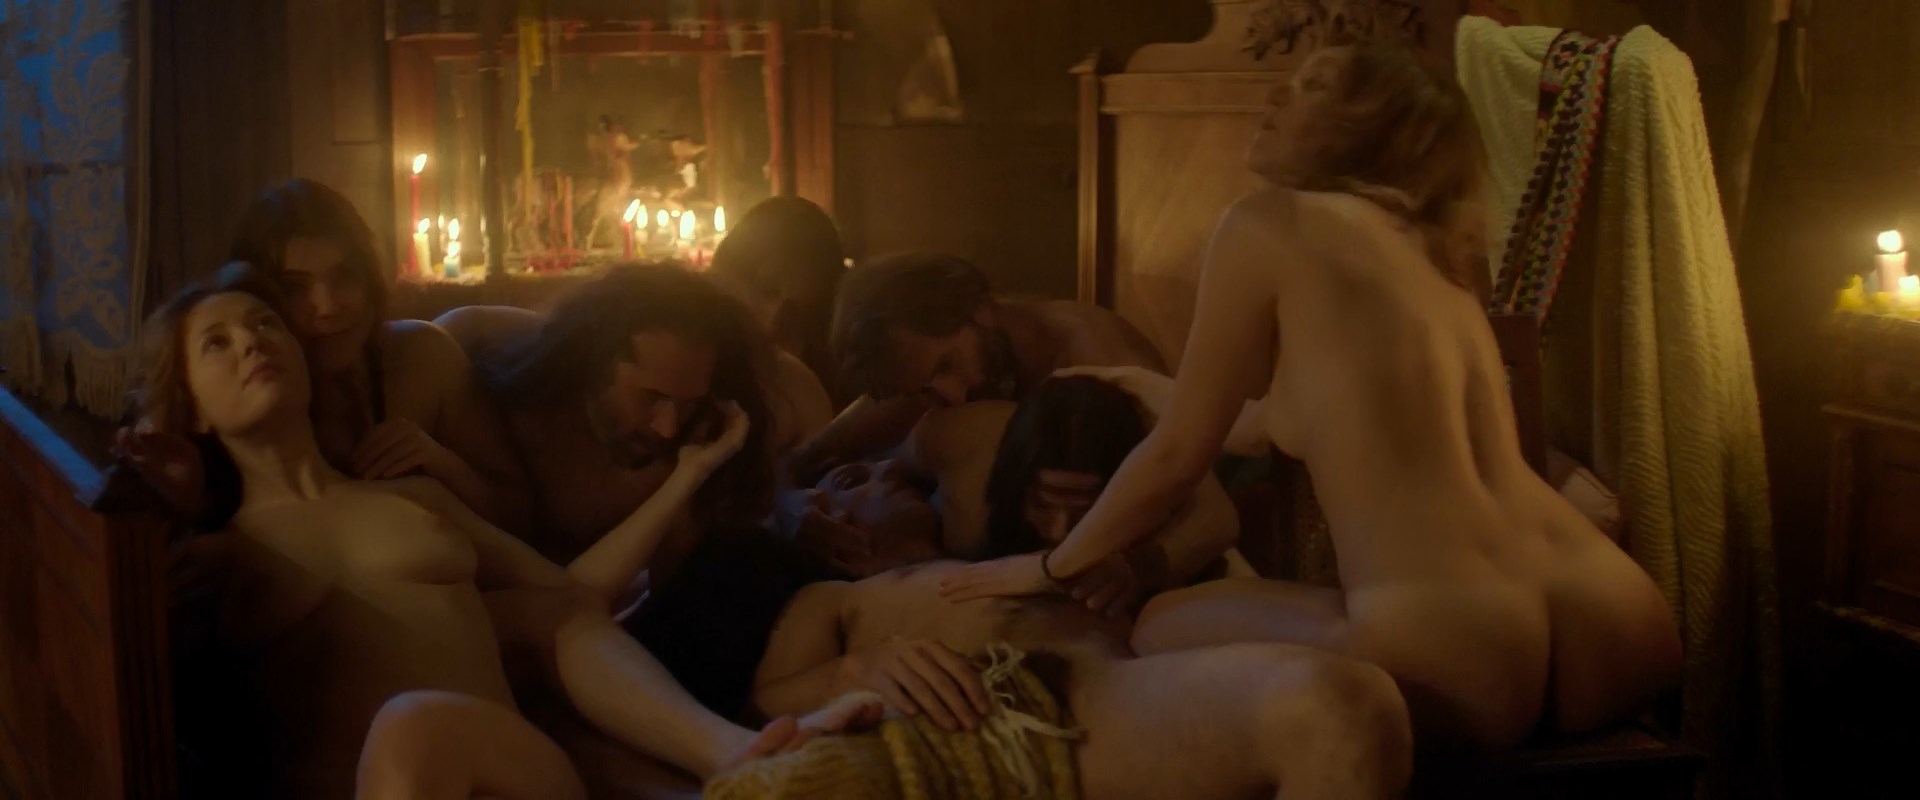 Nude Video Celebs Doria Tillier Sexy Fanny Ardant Sexy La Belle